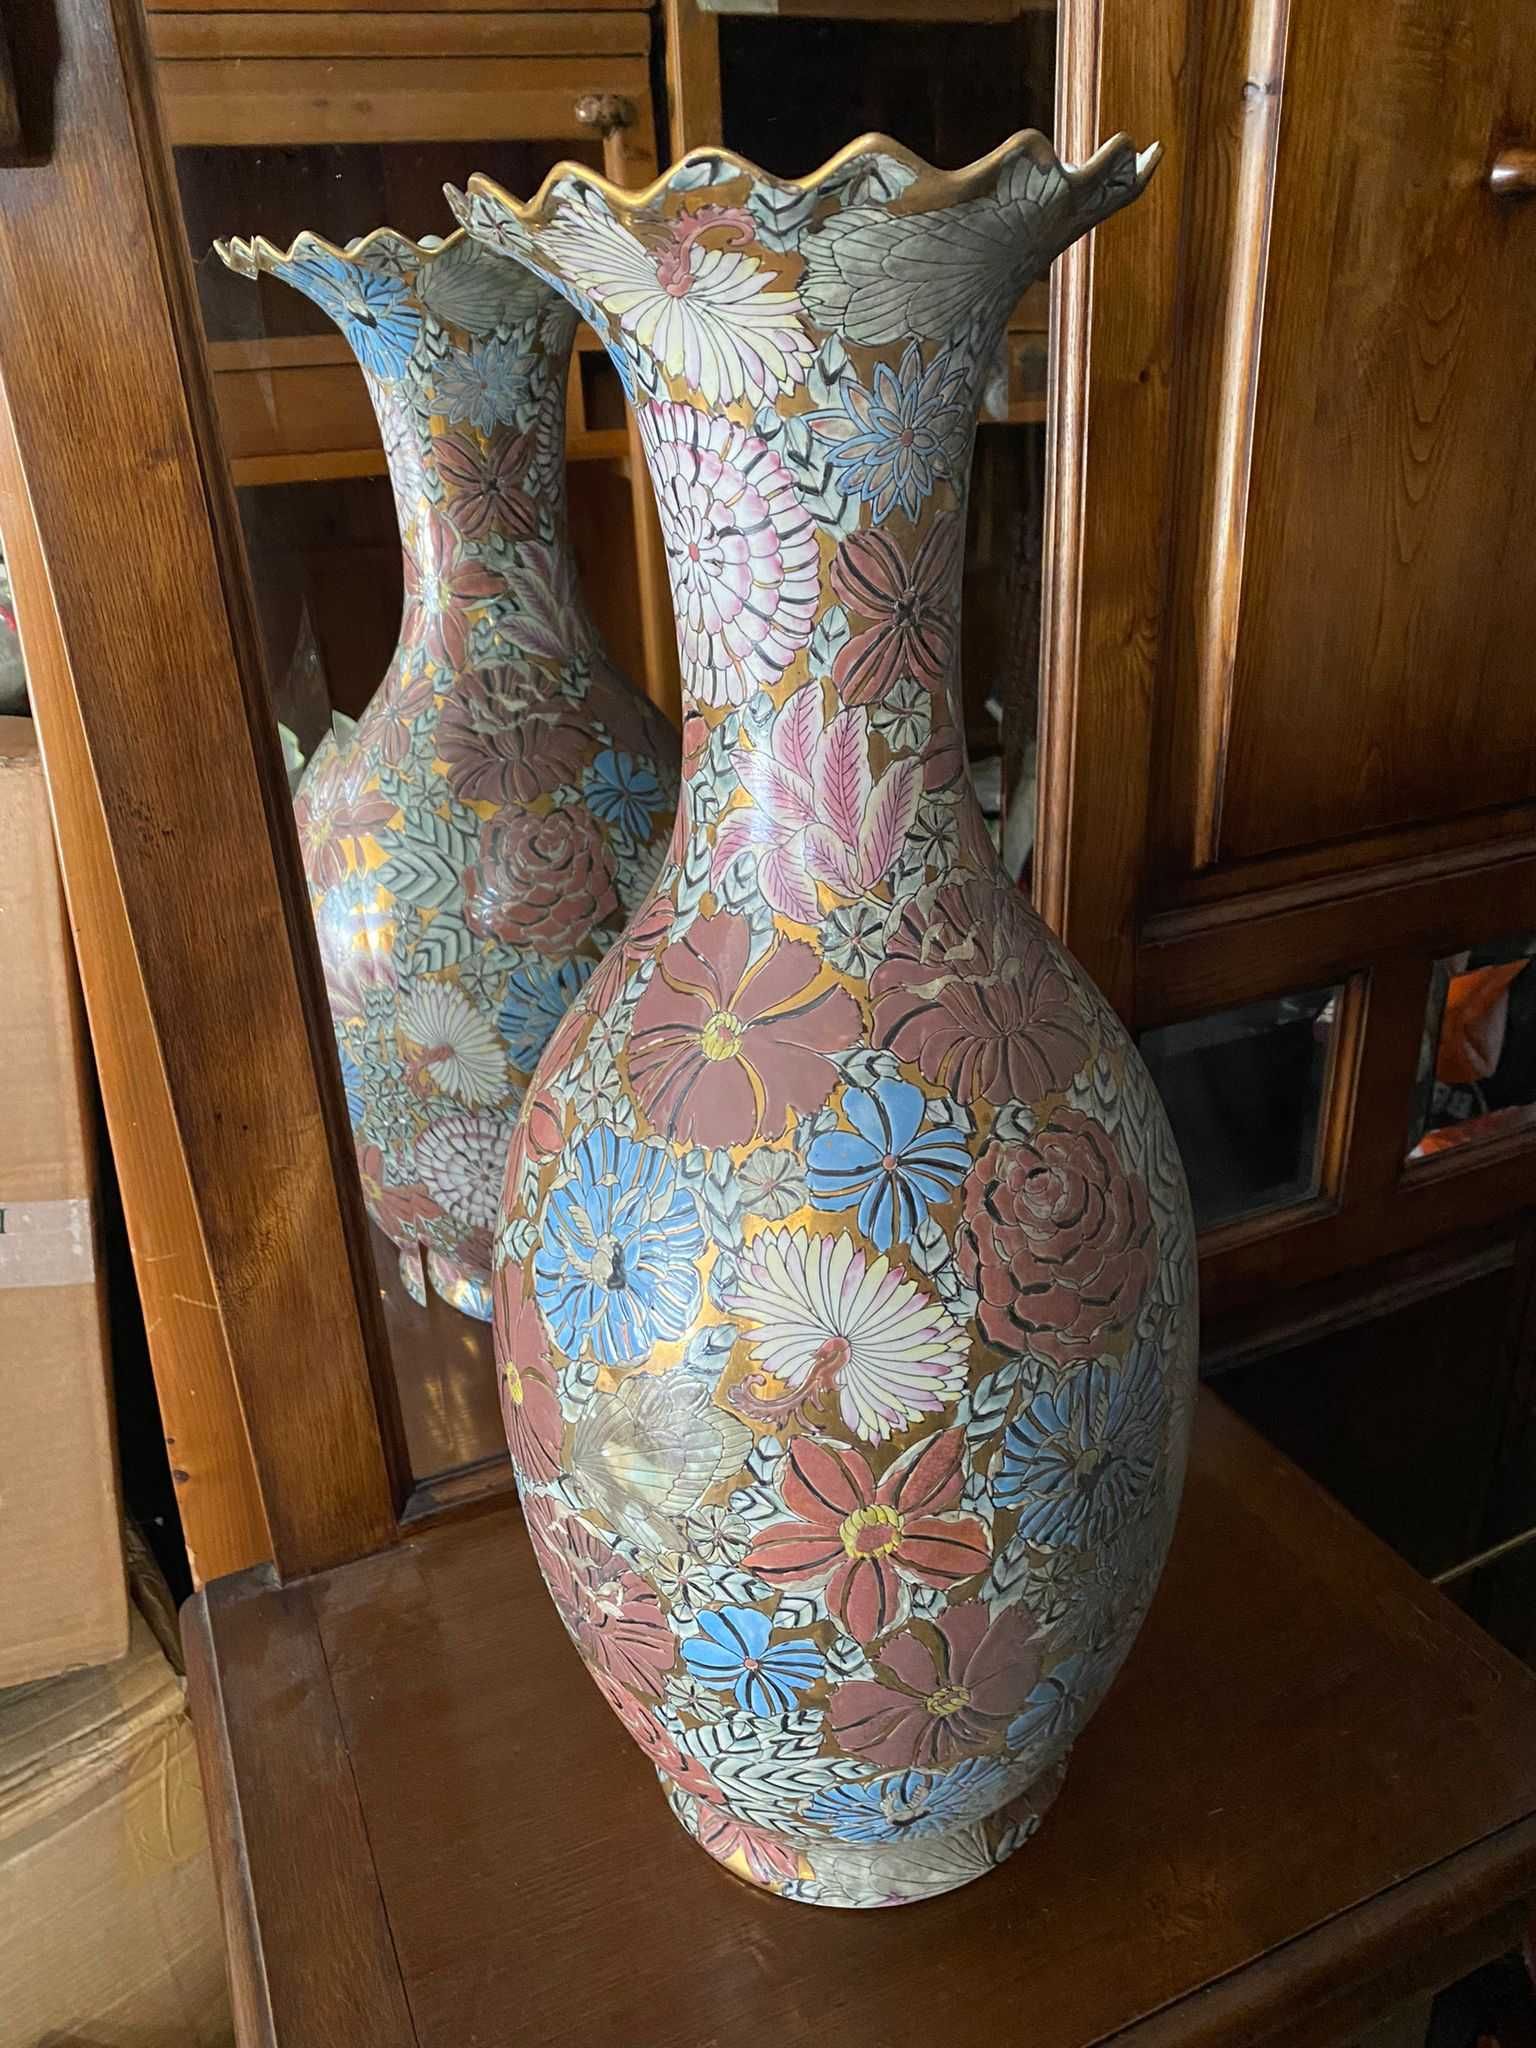 Jarros/ Vasos chineses - vários